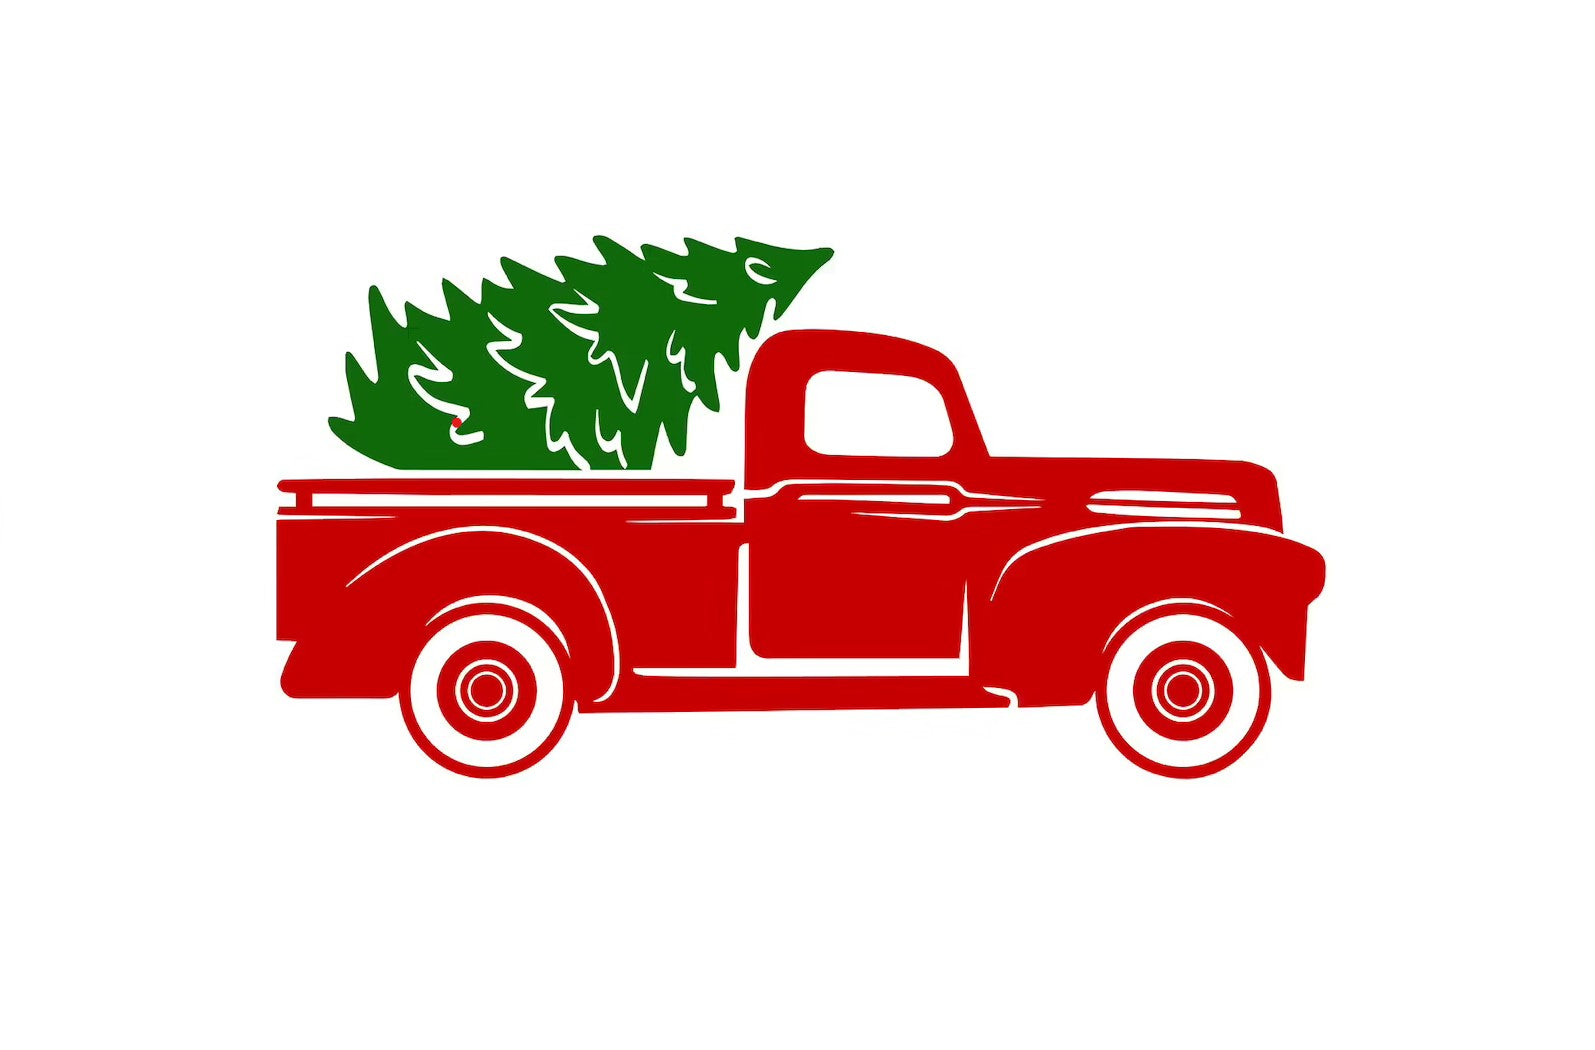 6 - 7 FT FARM FRESH FRASER FIR REAL CHRISTMAS TREE – Brungot Farms